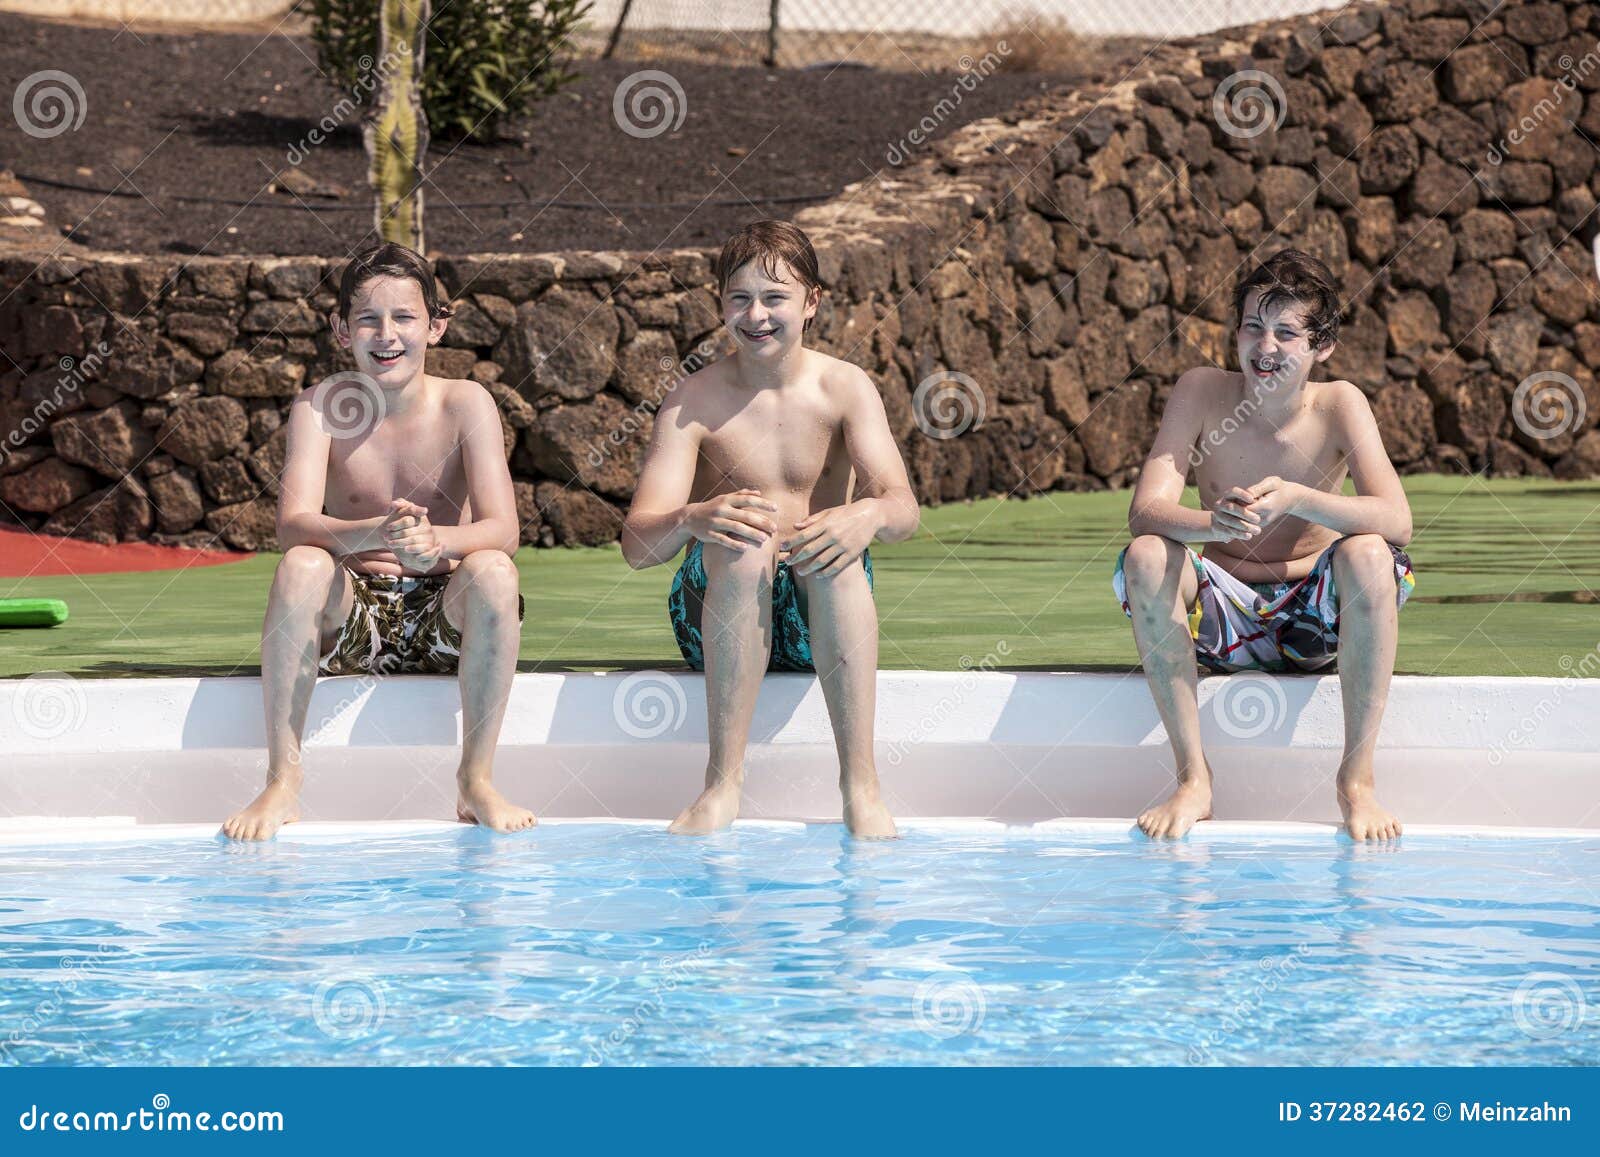 pool at Teen boys